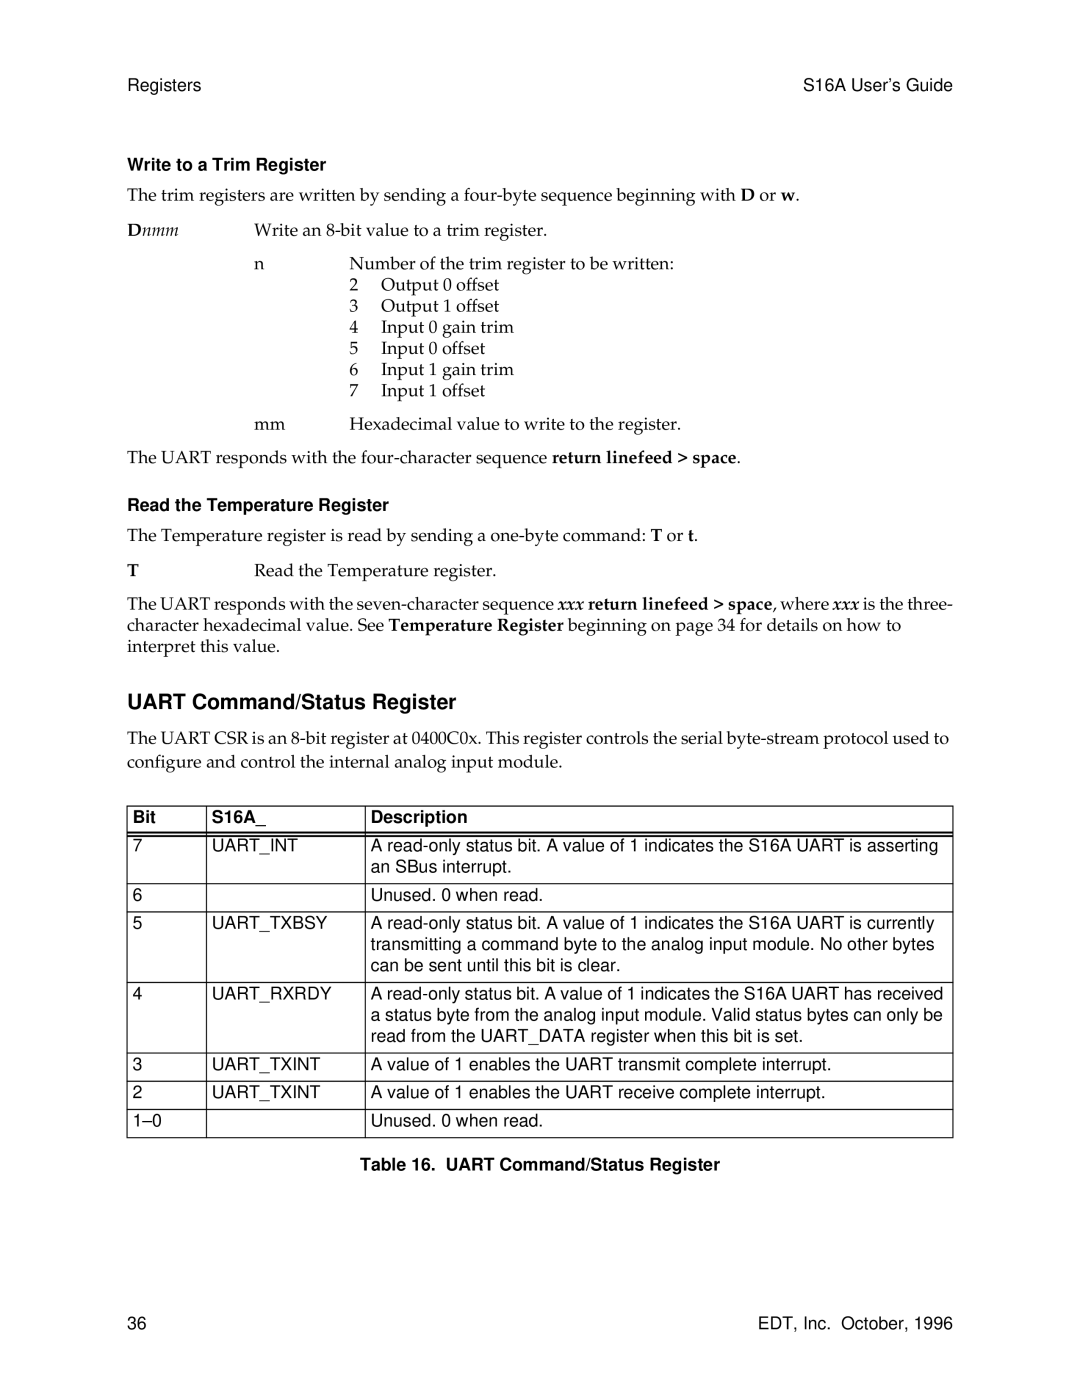 Sun Microsystems S16A manual UART Command/Status Register, Write to a Trim Register, Dnmm, Output 0 offset, Output 1 offset 